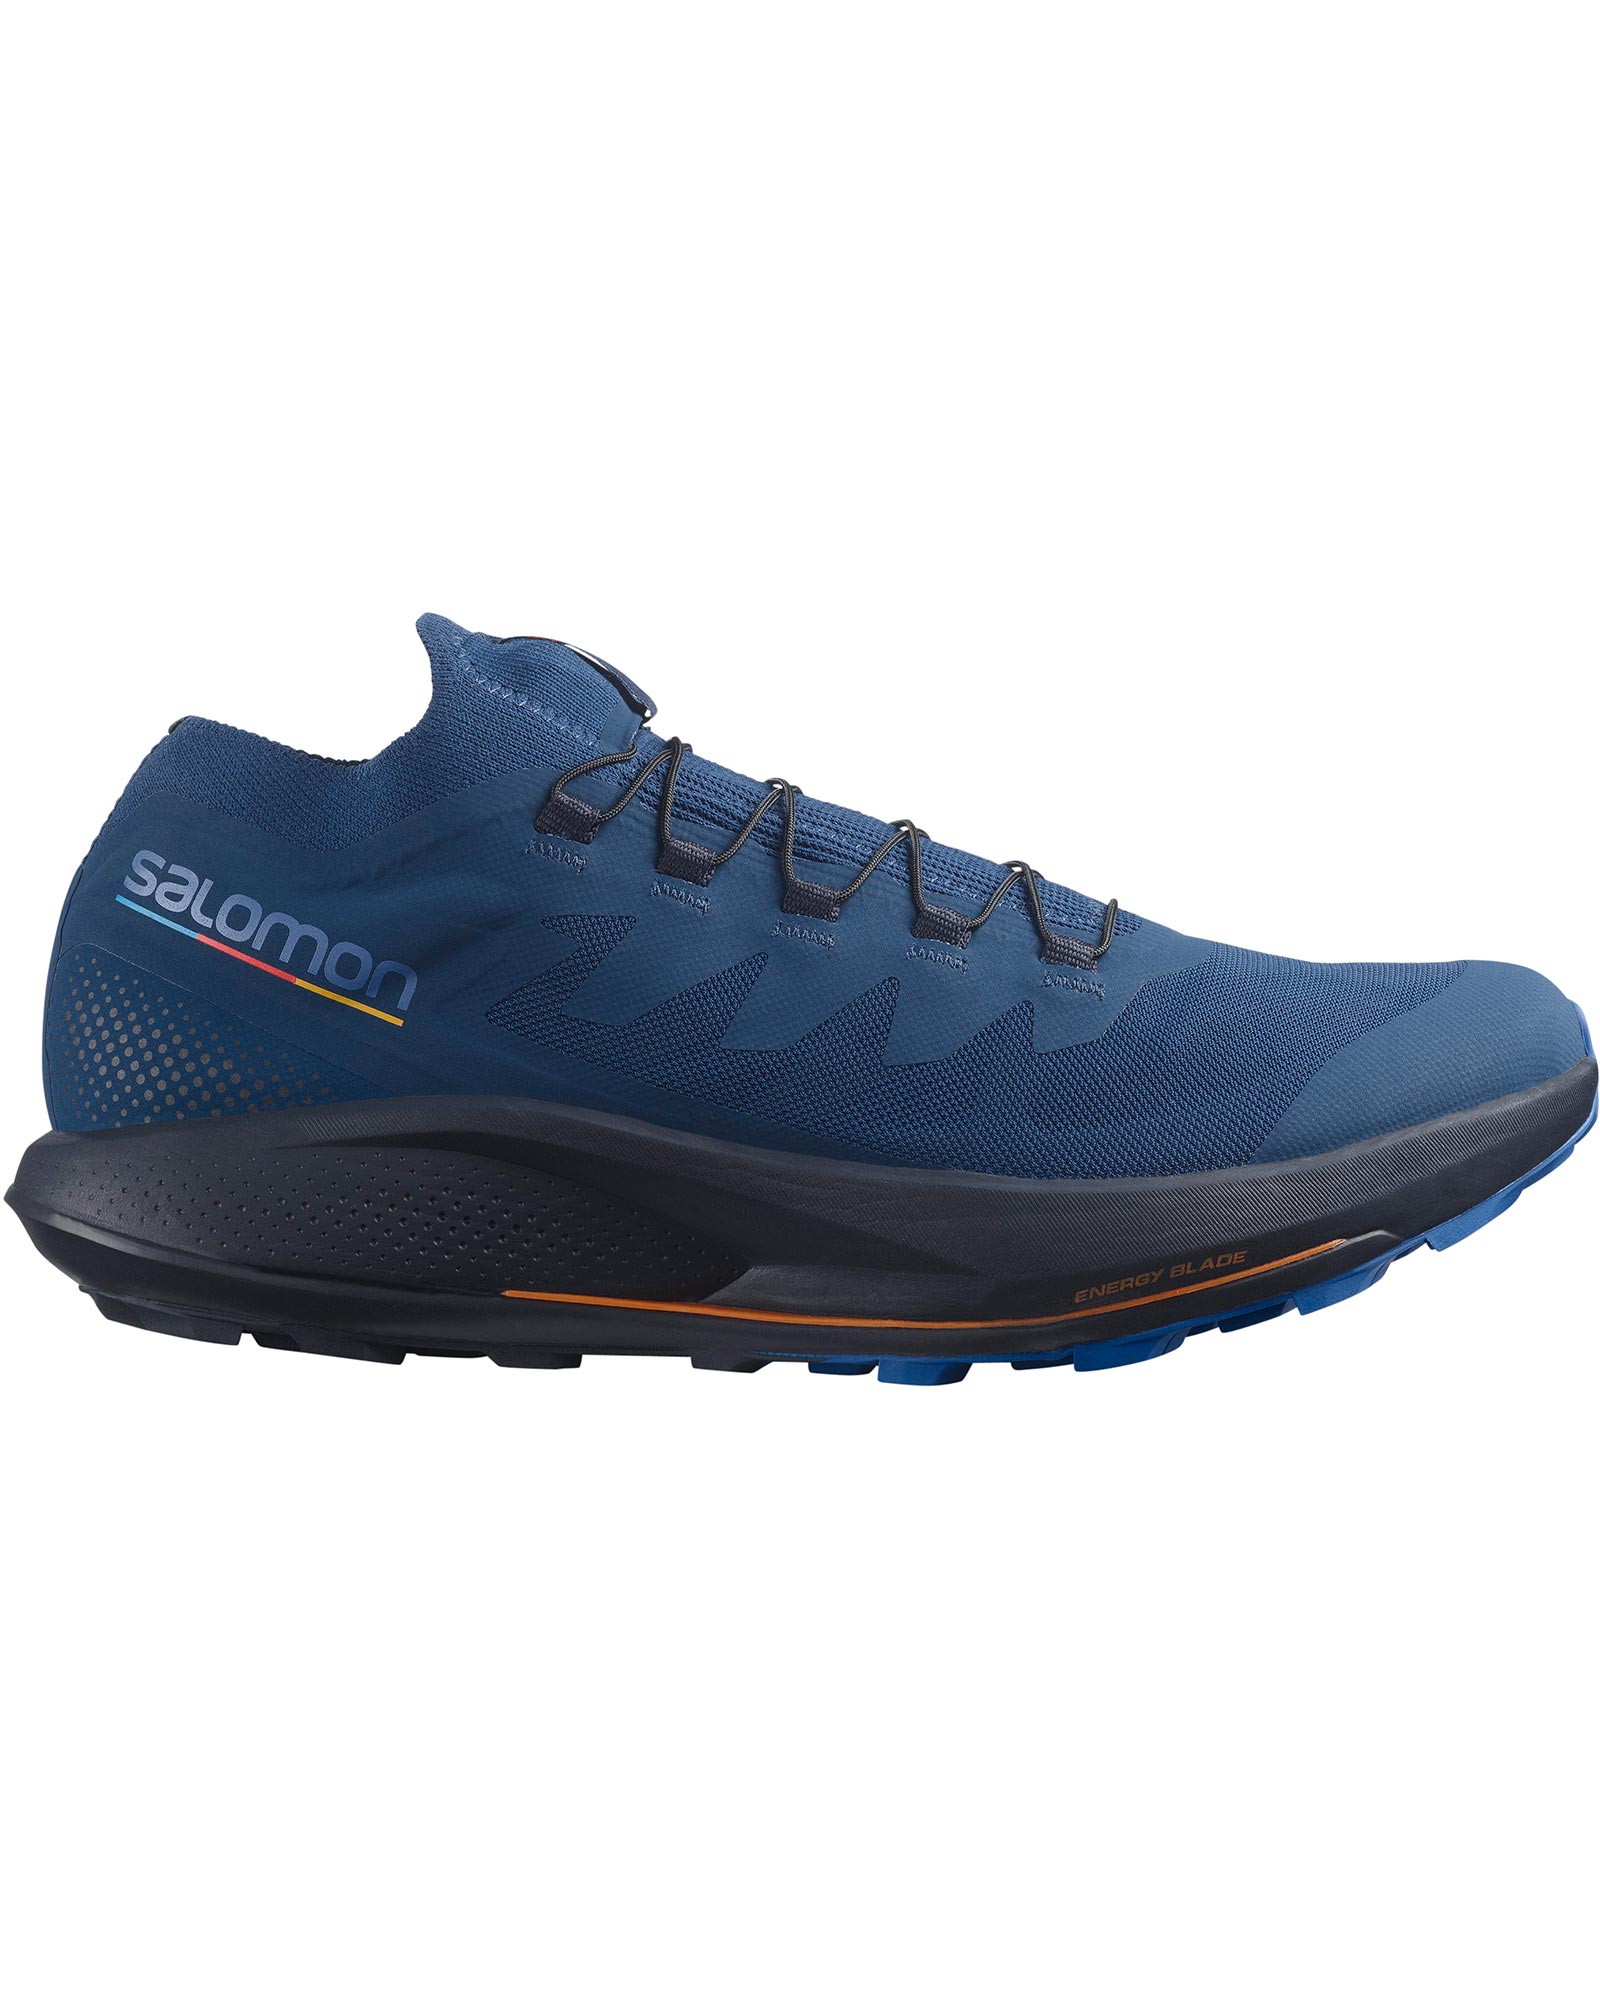 Salomon Pulsar Trail Pro Men’s Shoes - Estate Blue/Night Sky/Dazzling Blue UK 10.5